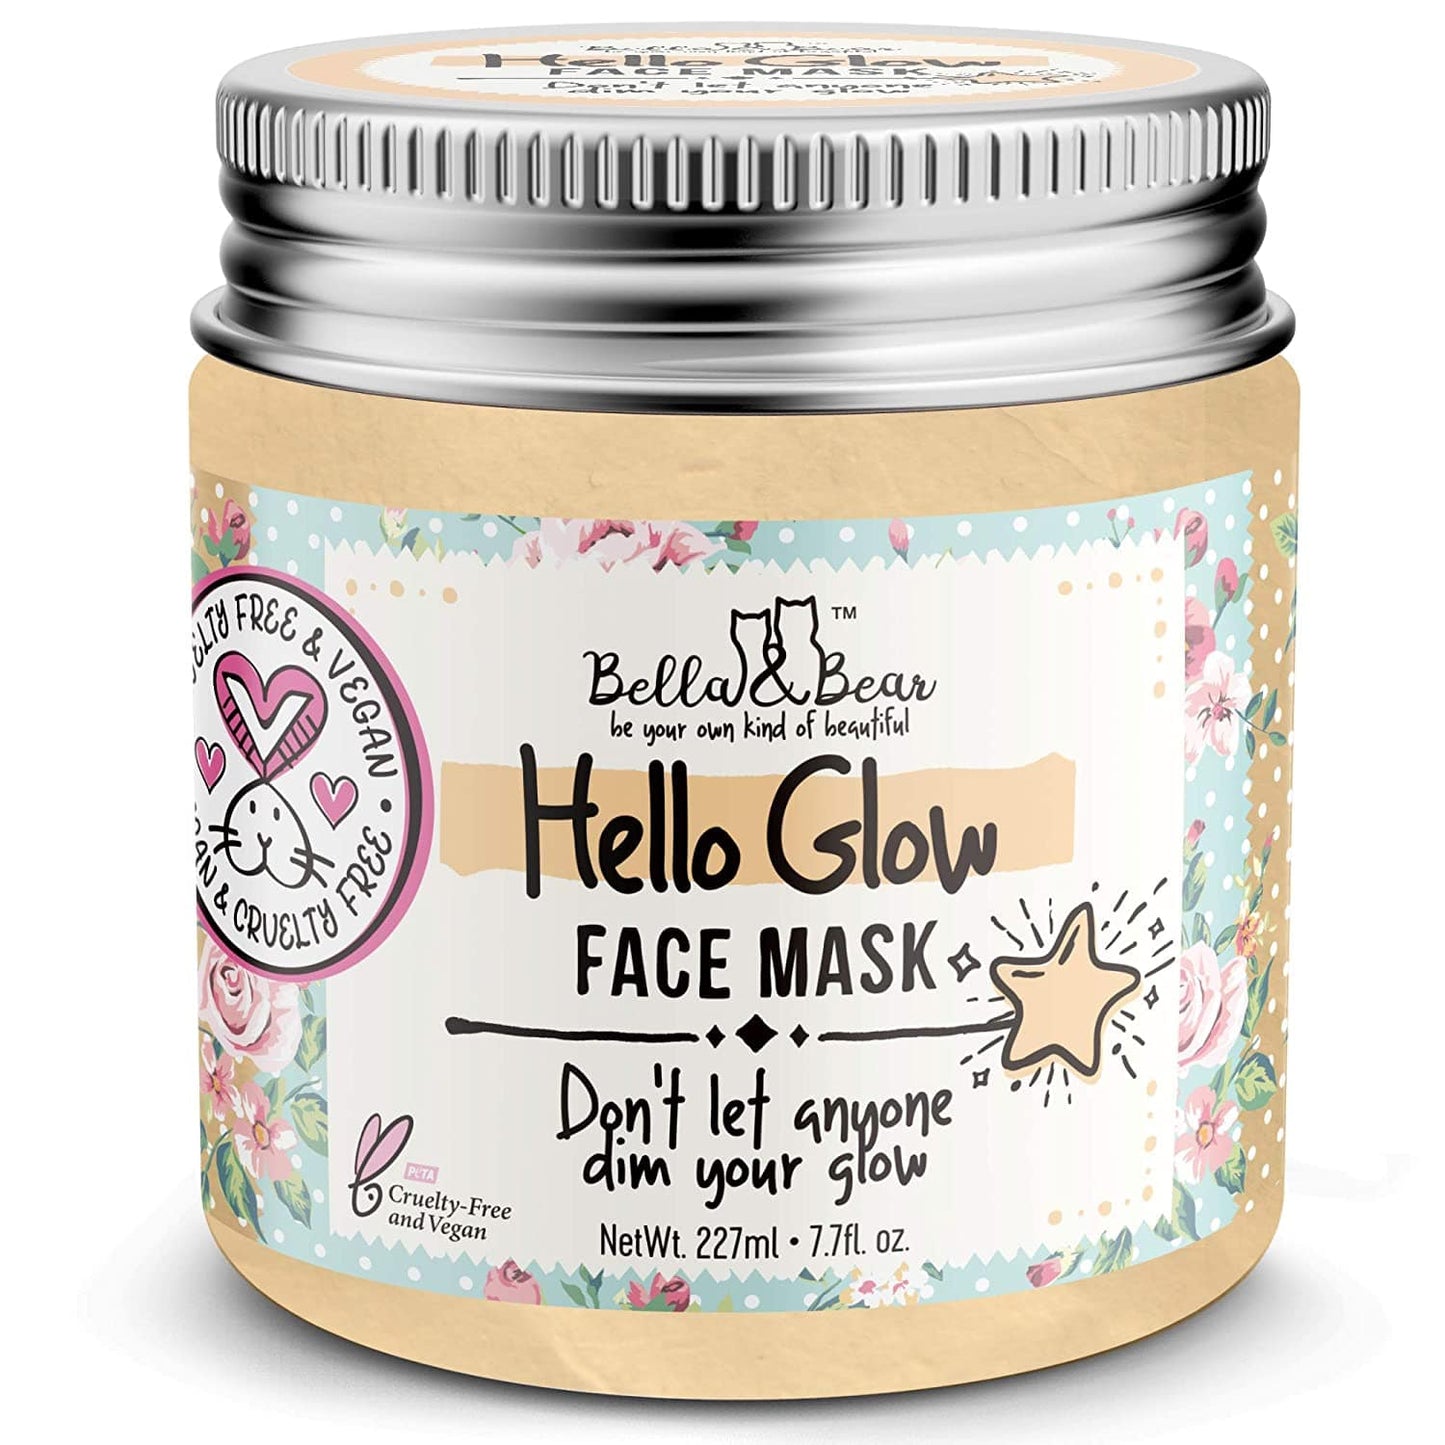 Hello Glow Face Mask 6.7oz